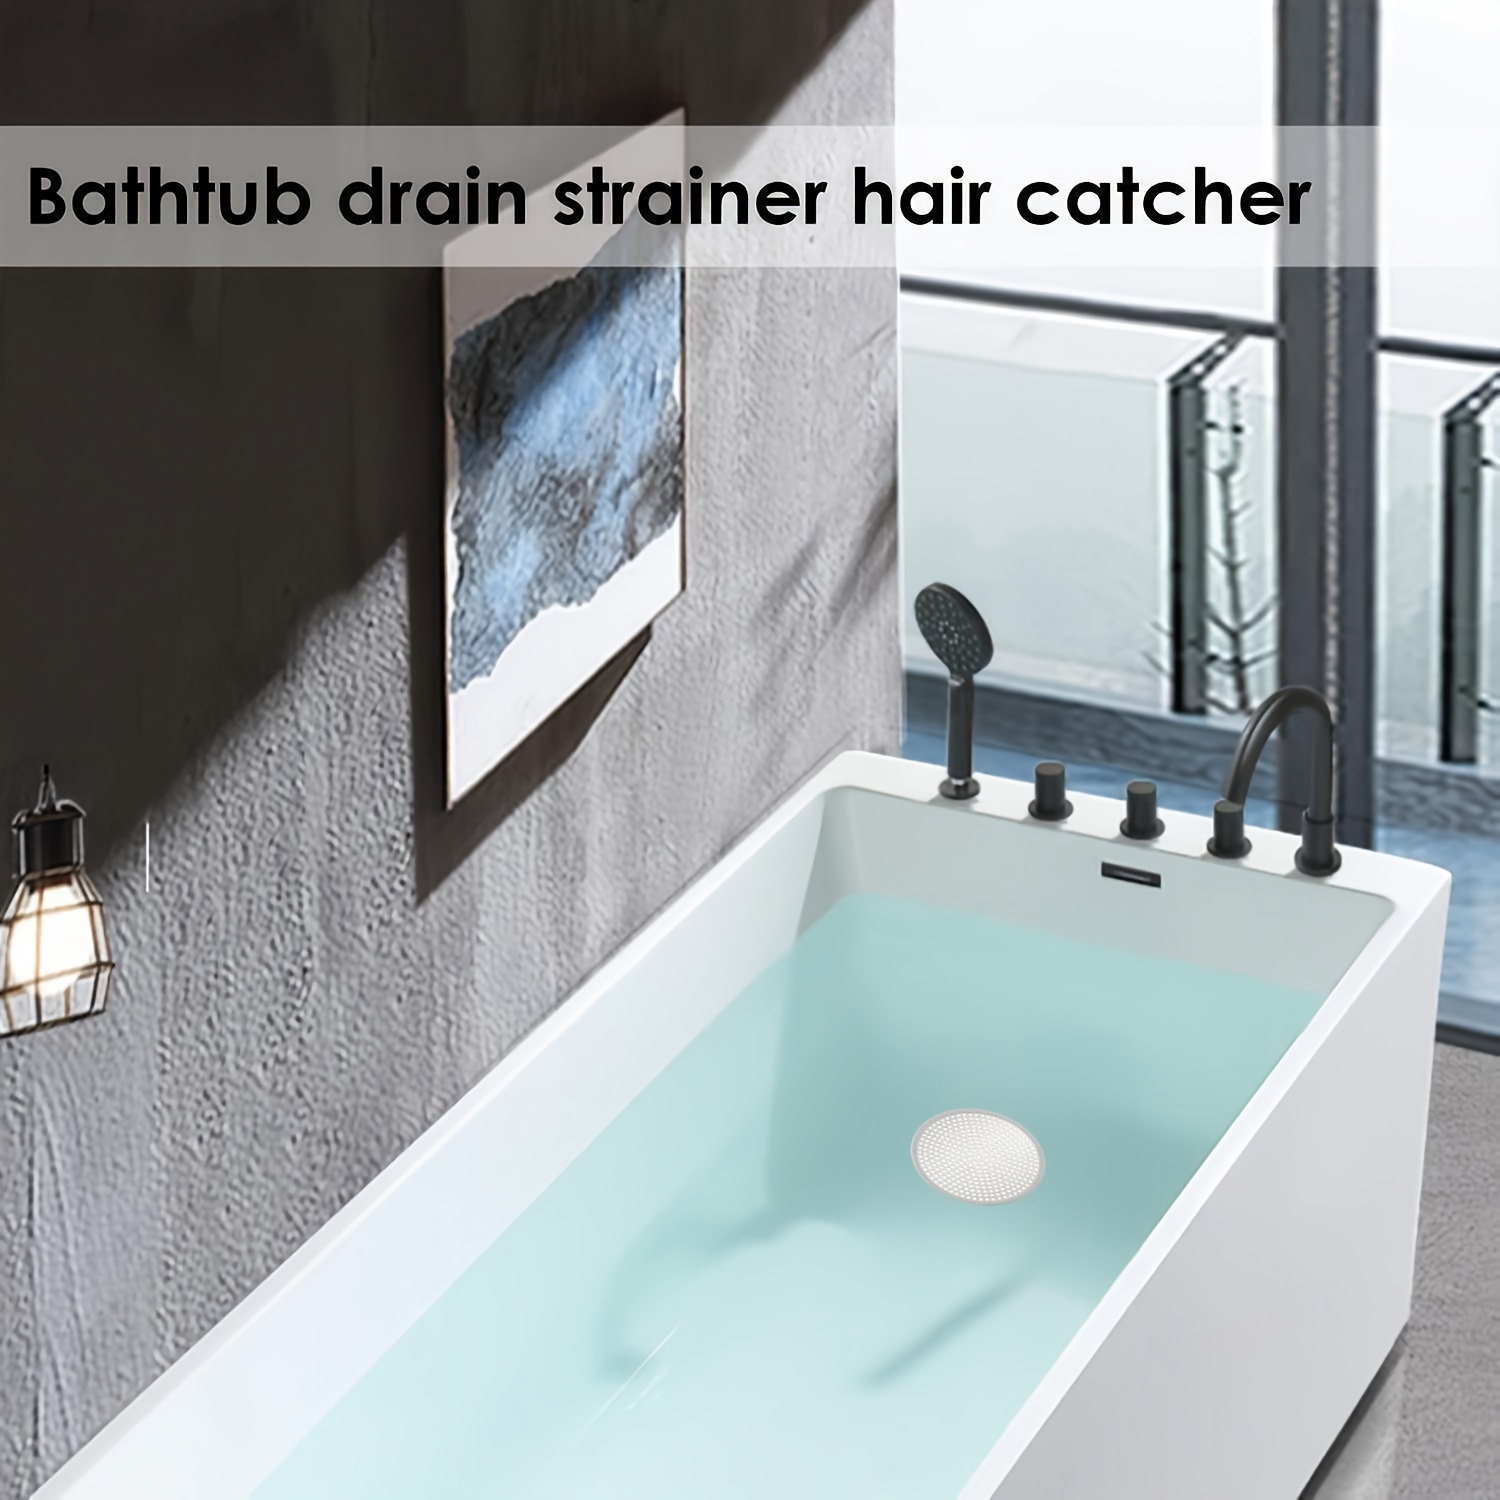 Lekeye Drain Hair Catcher/Bathtub Shower Drain Hair Trap/Strainer Stainless Steel Drain Protector